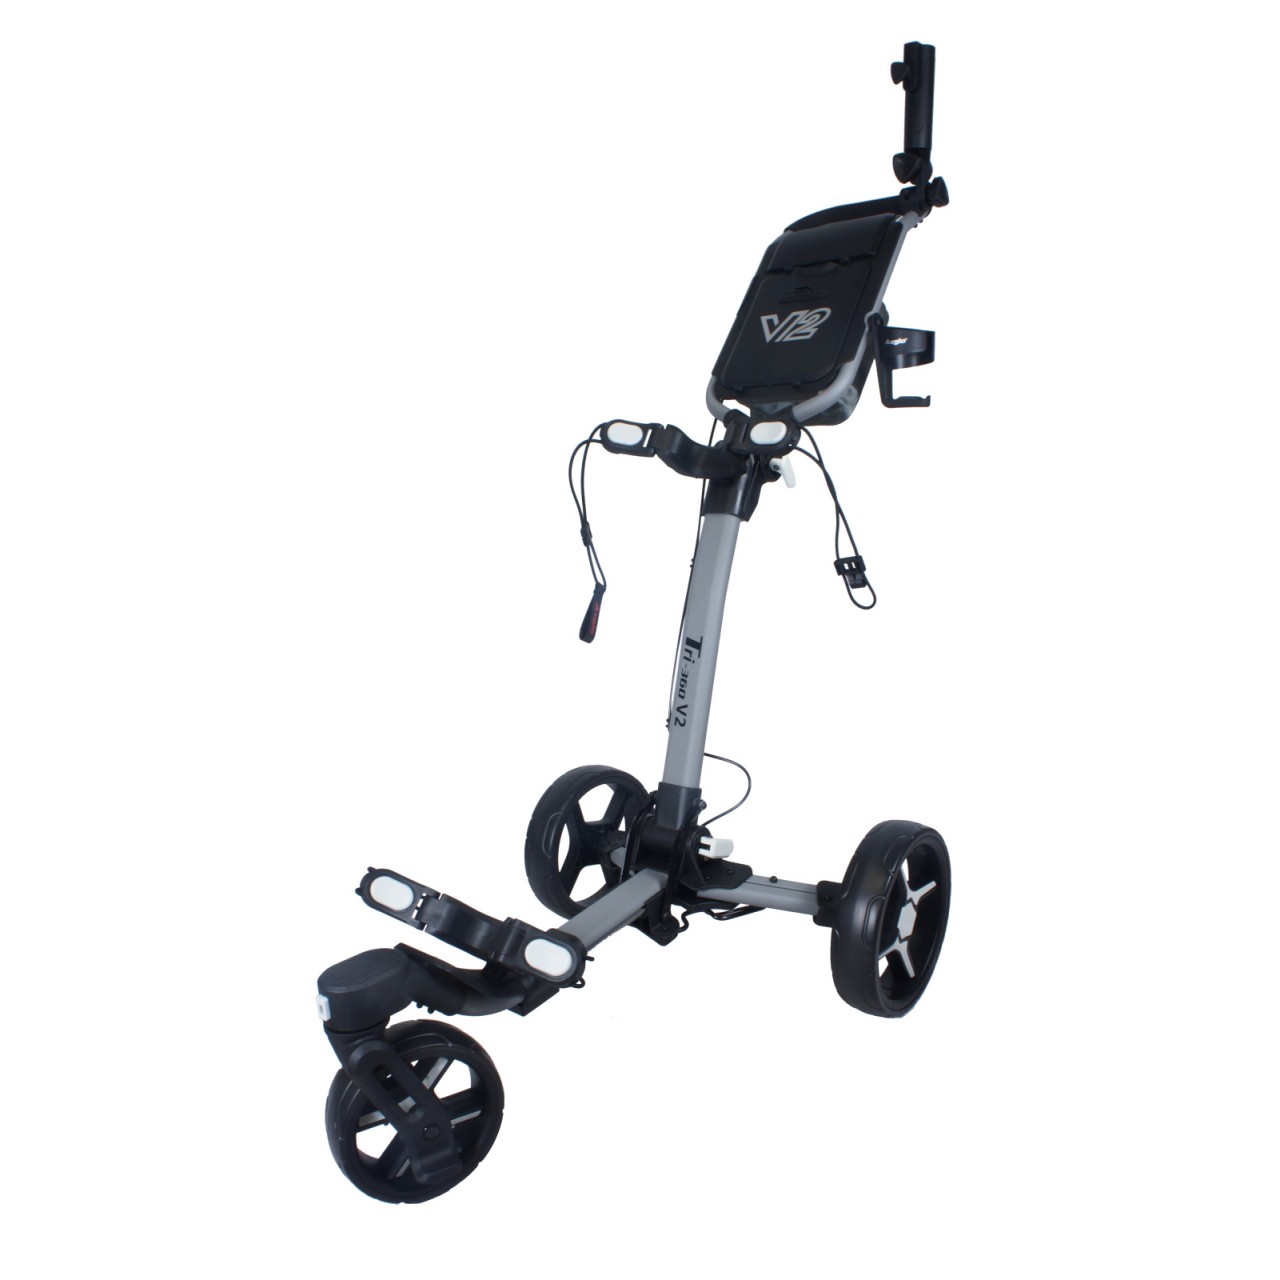 AXGLO Tri-360 V2 ruèní tøíkolový golfový vozík GREY/GREY + ZDARMA obal na kola - zvìtšit obrázek